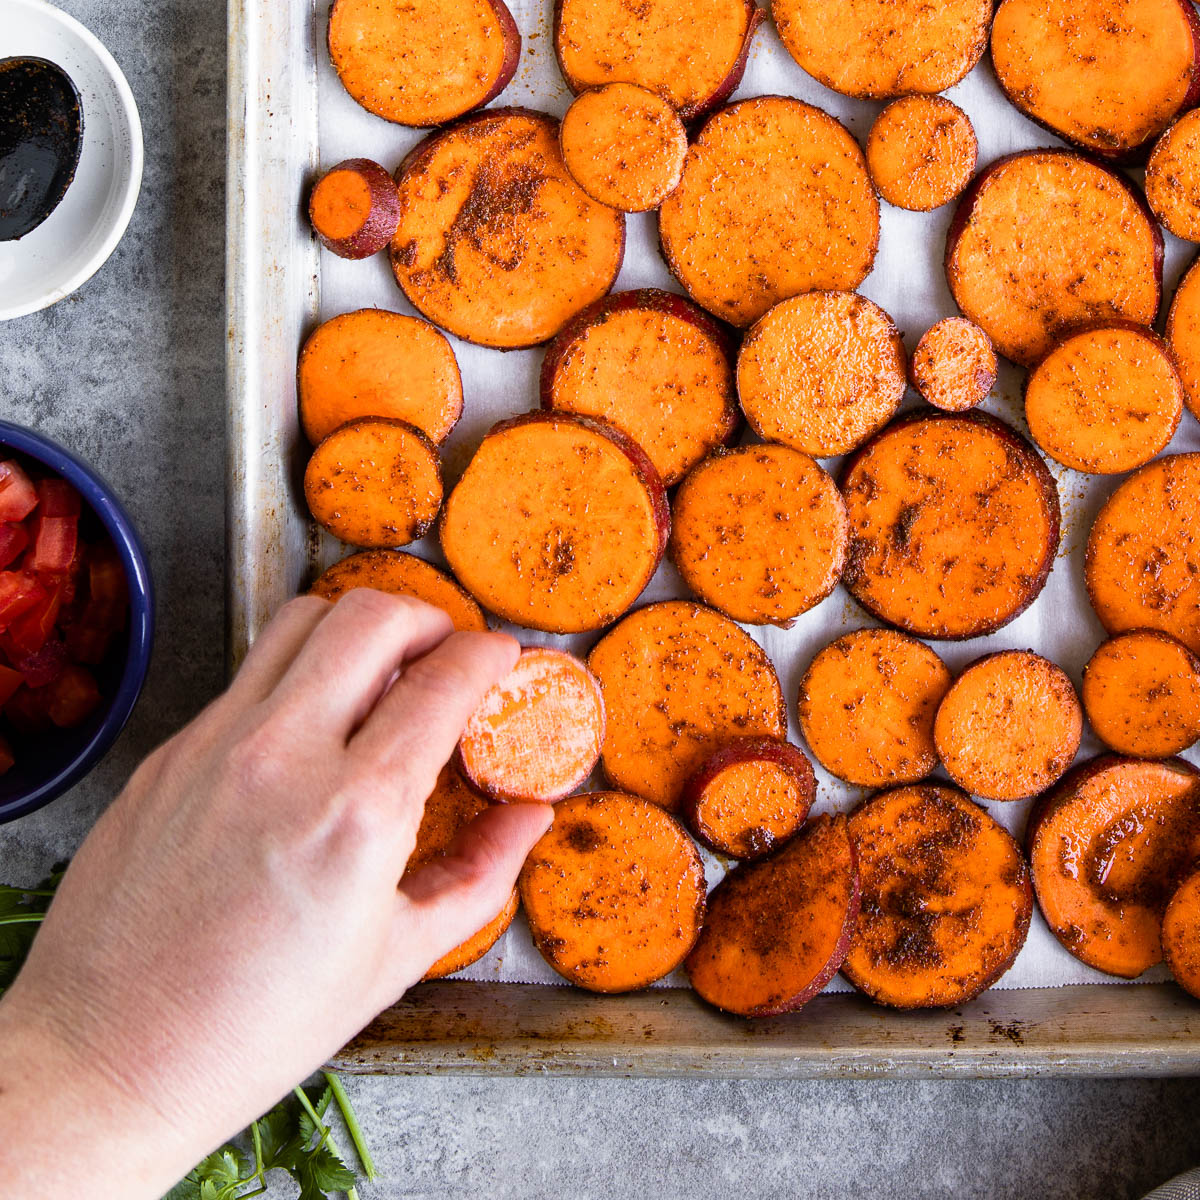 Arranging sweet potatoes on a sheet pan